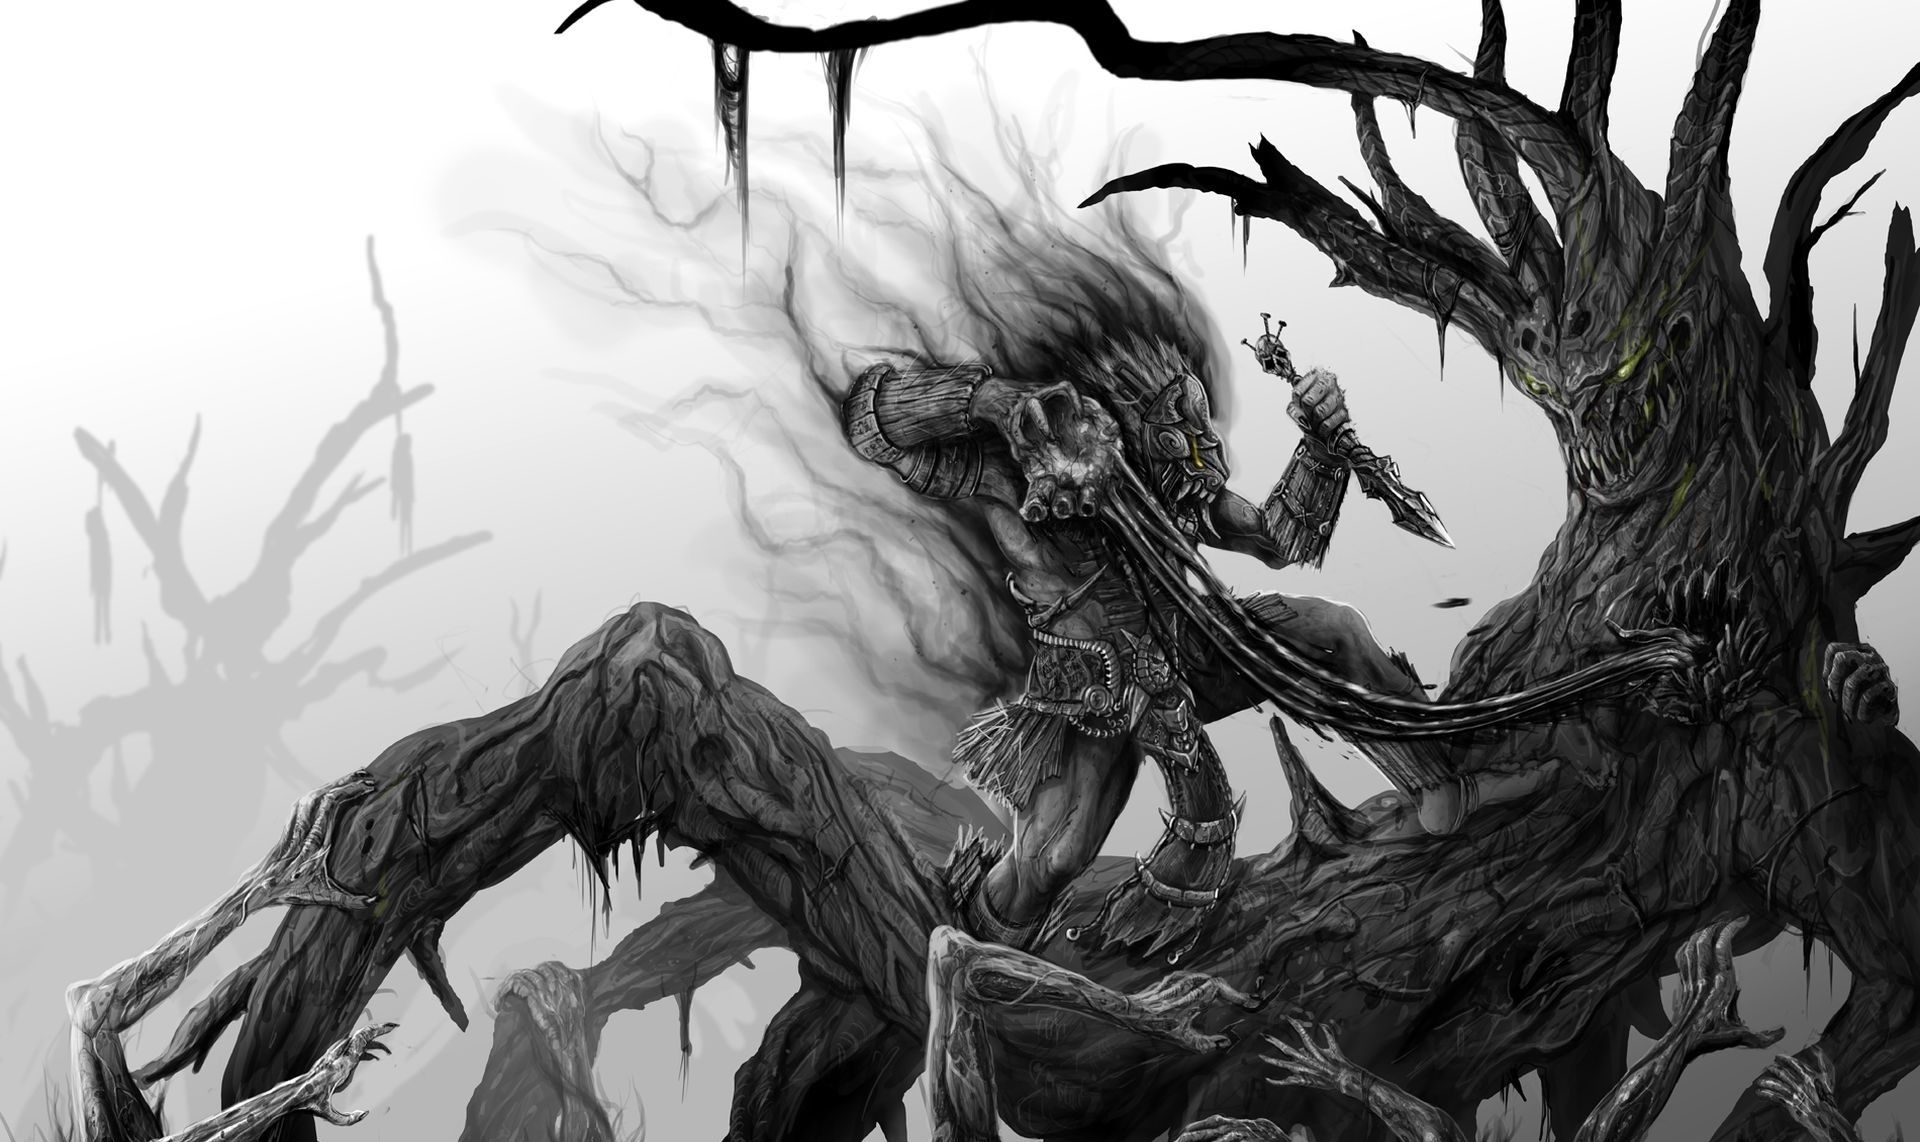 Dark fantasy warrior monster creatures weapon horror scary creepy spooky art battle wallpaperx1142